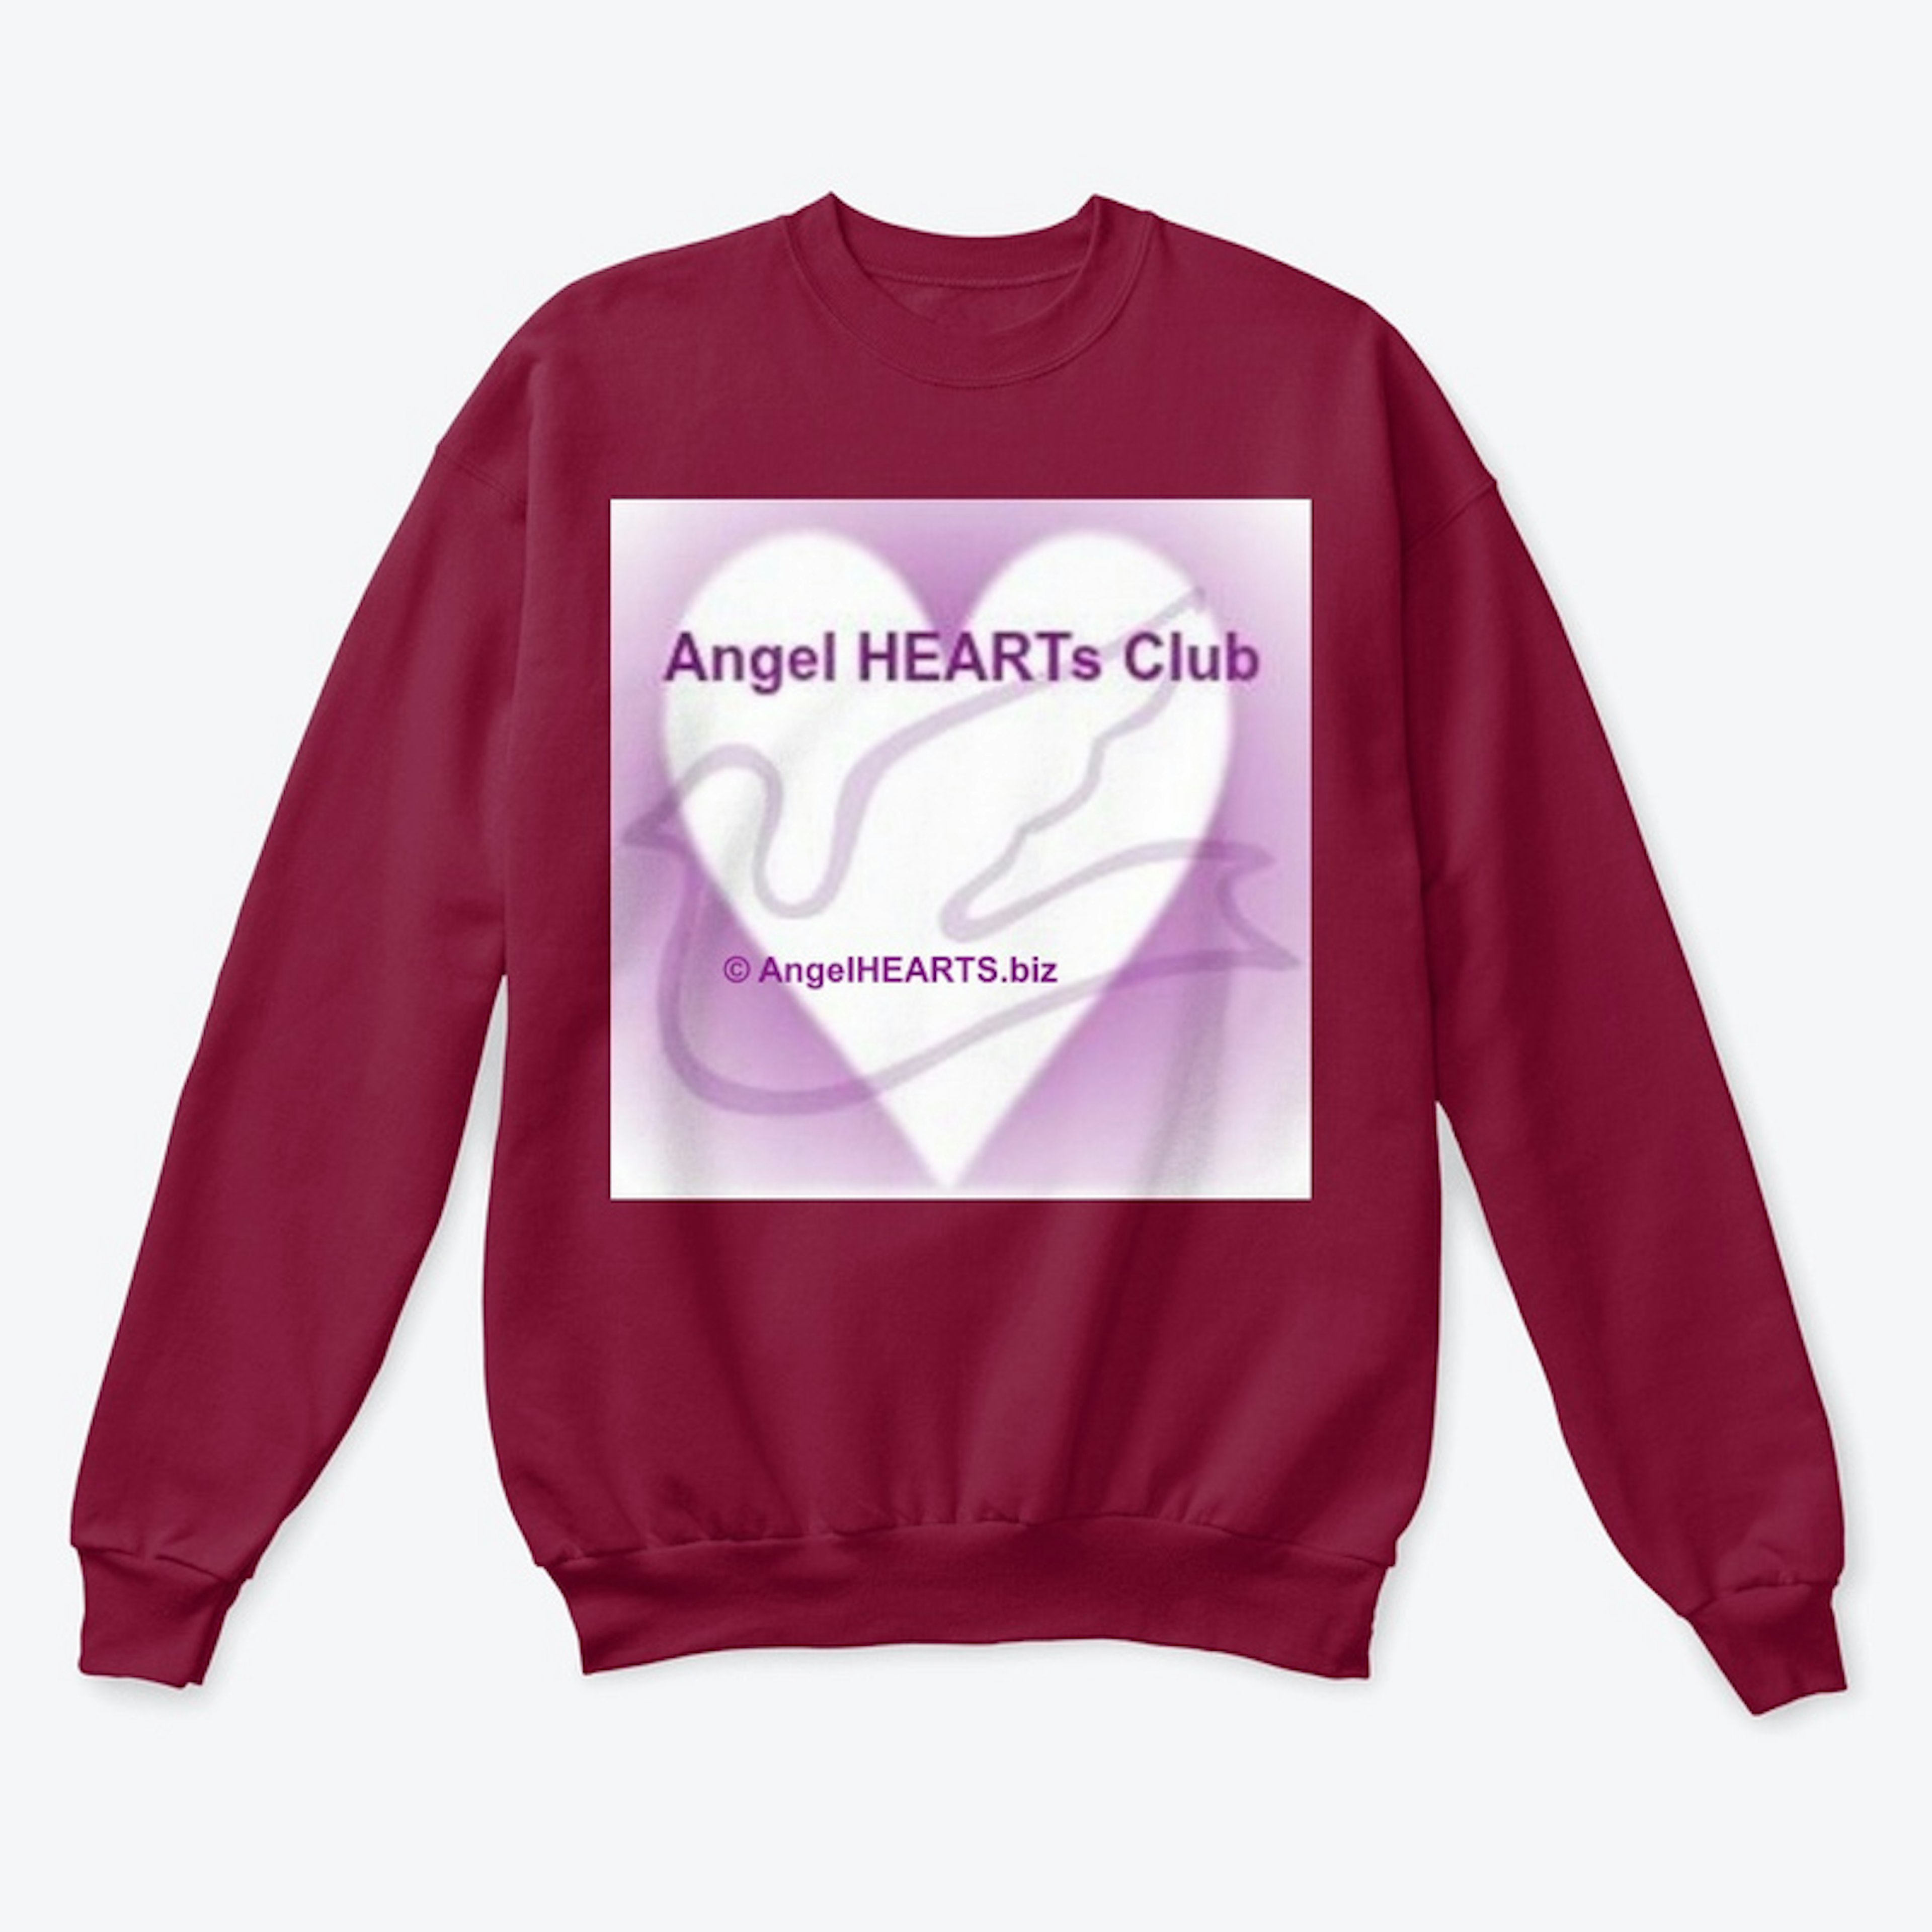 Angel HEARTs Club